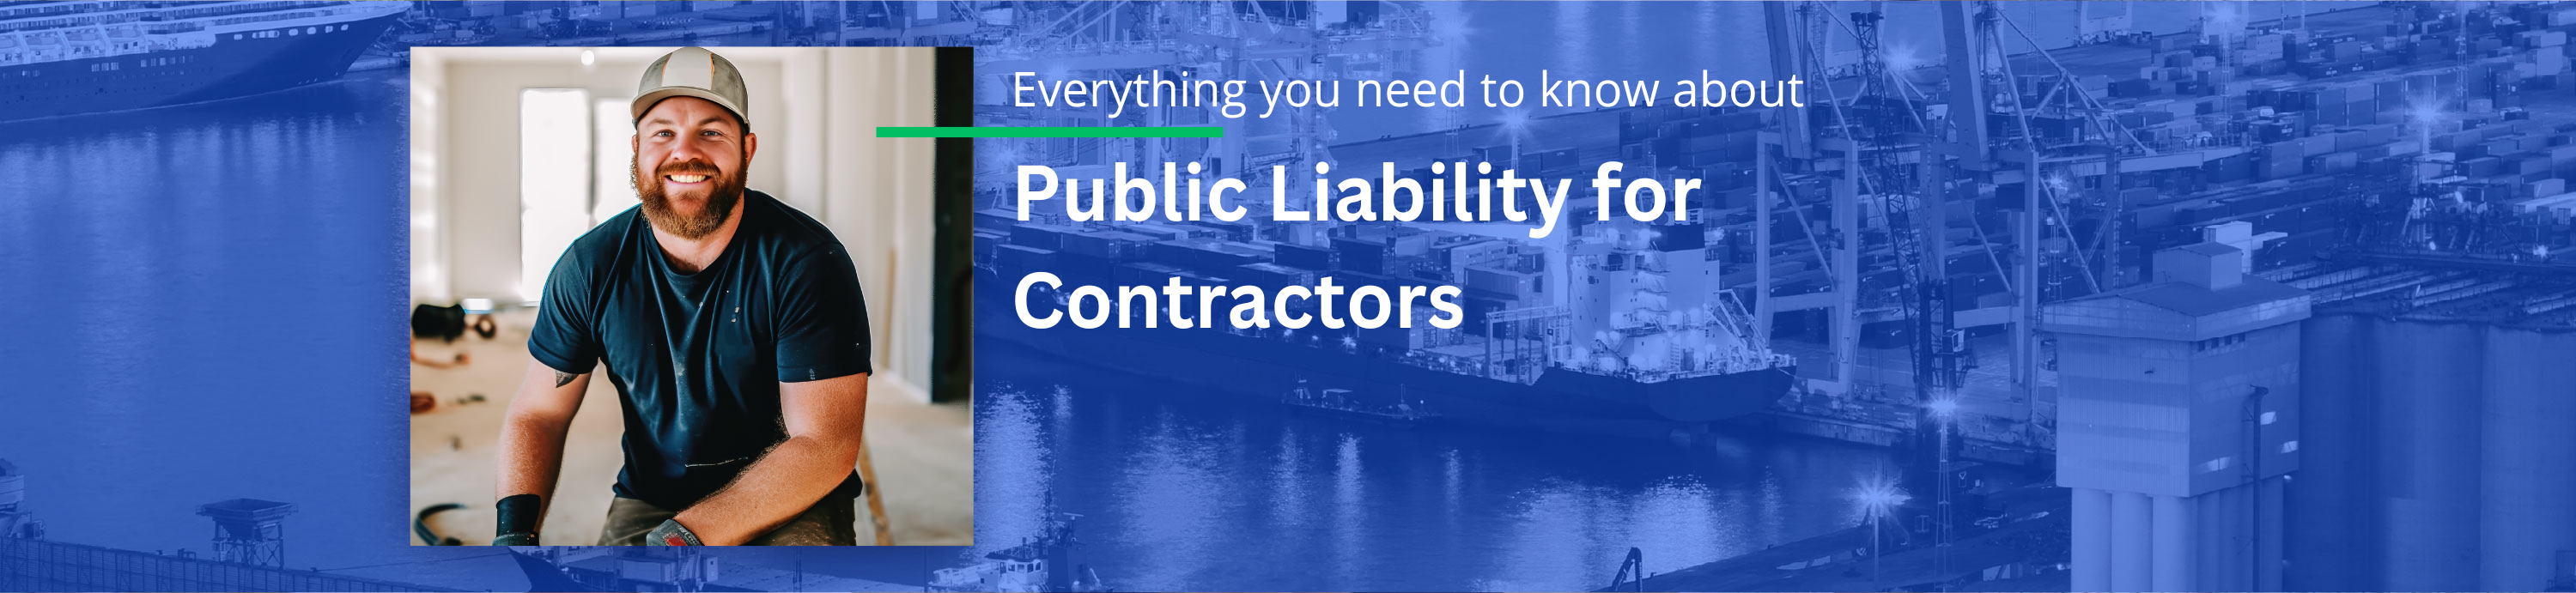 Contractor Public Liability Insurance Guide